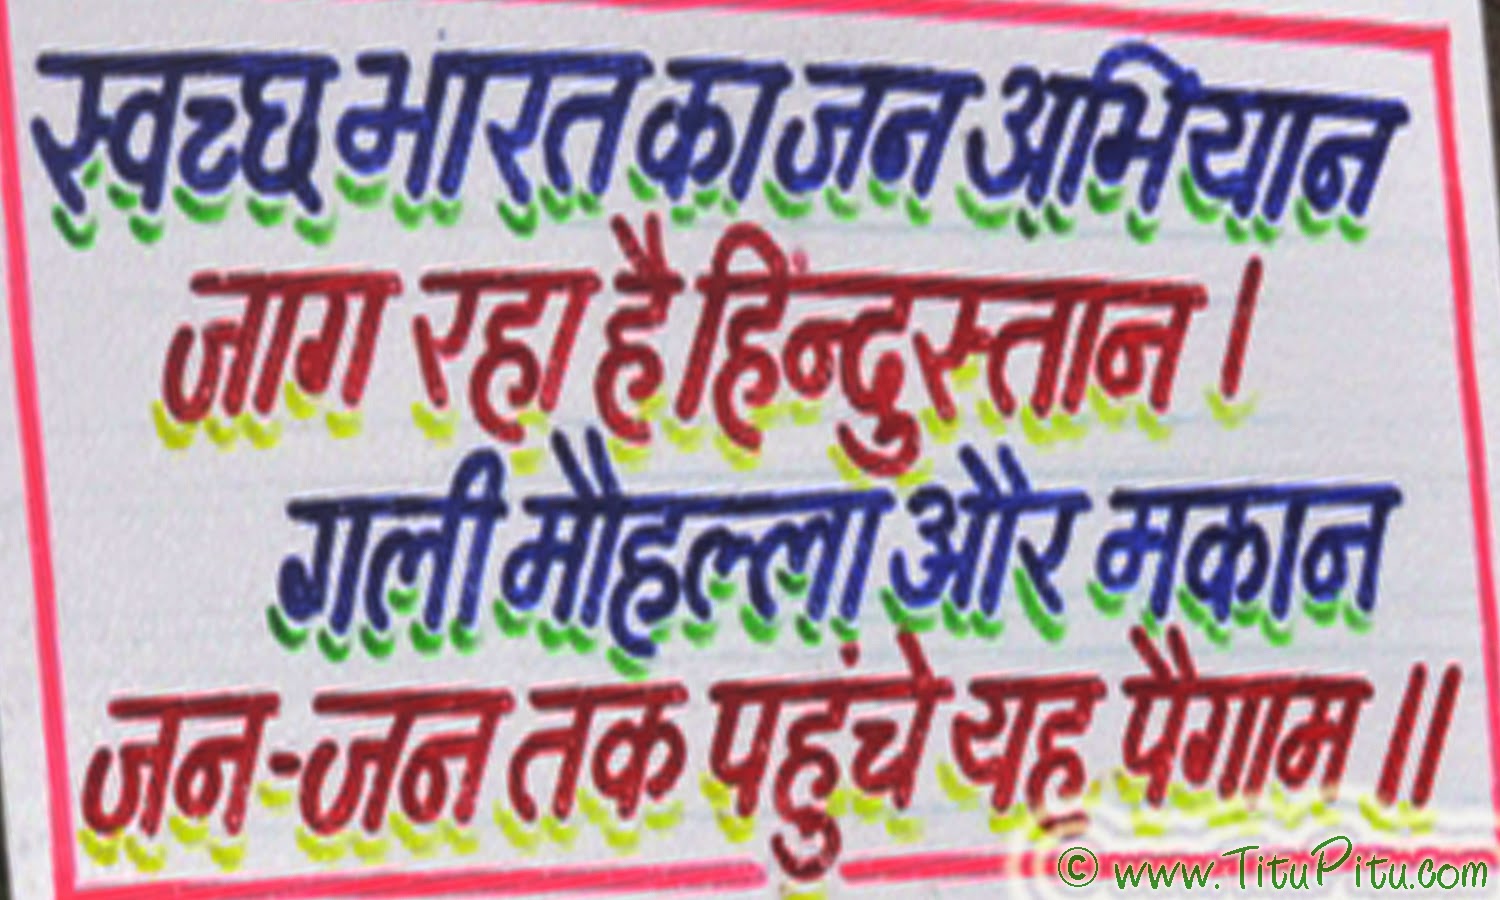 swachata-abhiyan-Hindi-slogan